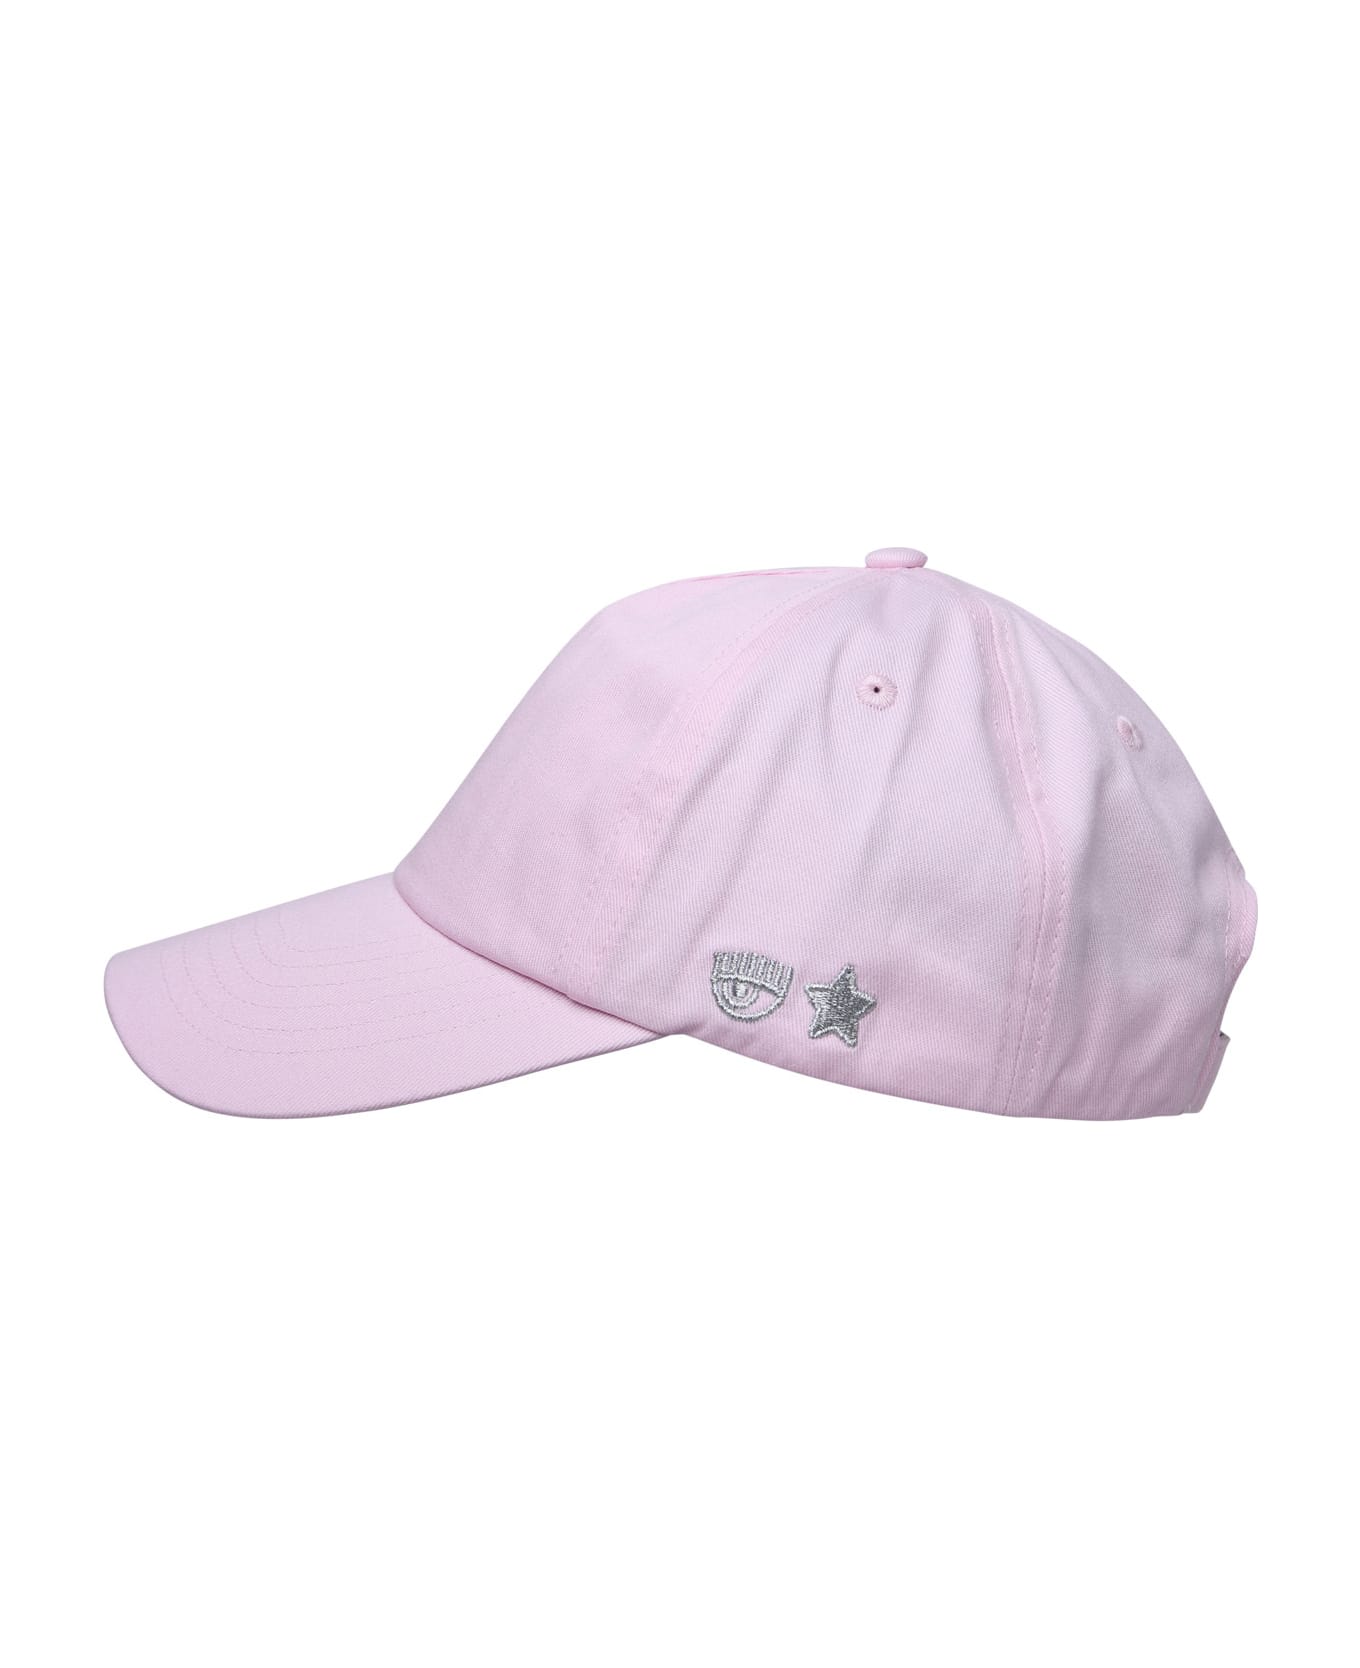 Chiara Ferragni Pink Cotton Hat - Pink